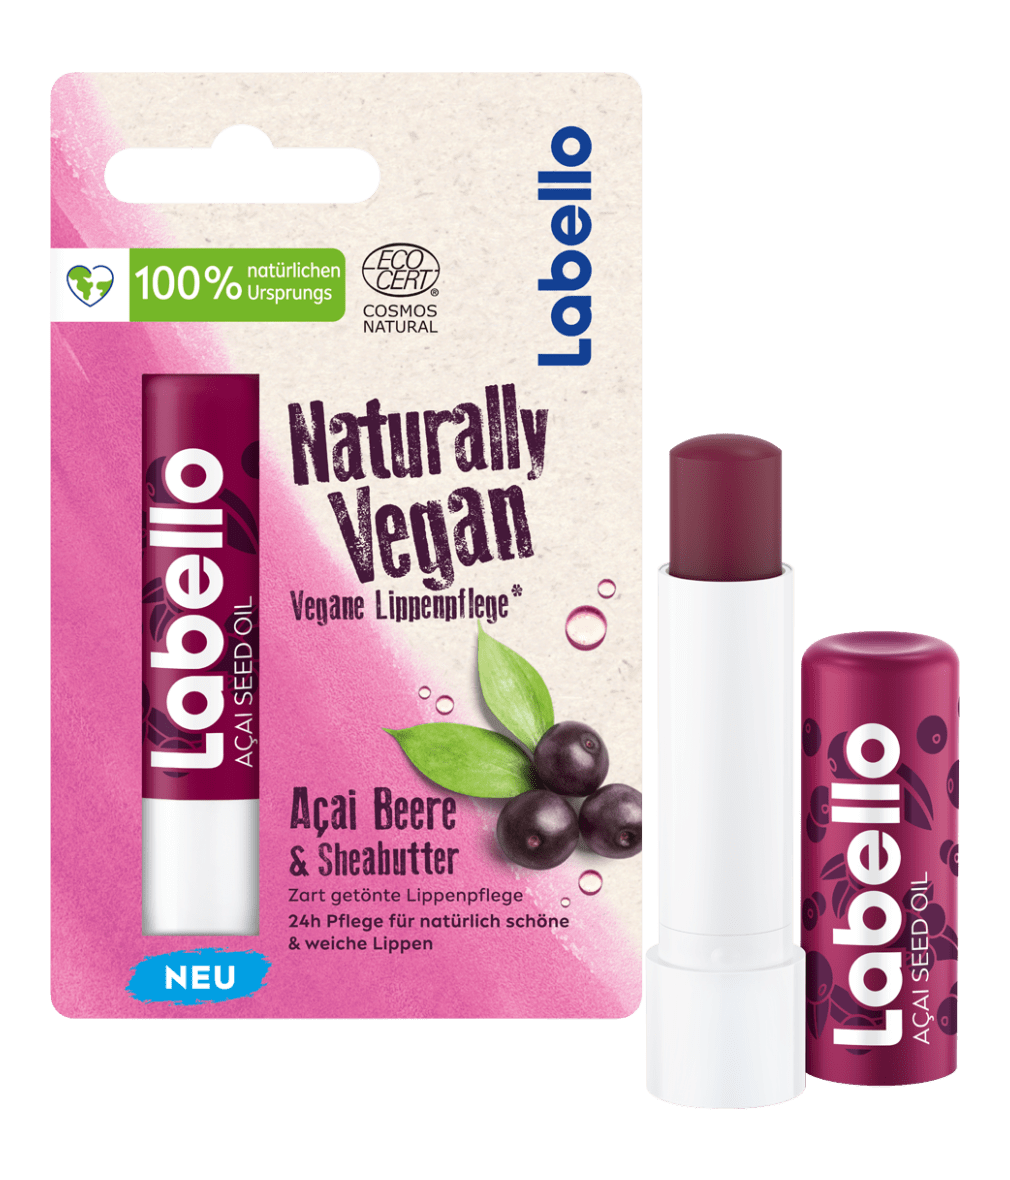 Labello Naturally Vegan Acai Seed Oil 5,2 ml